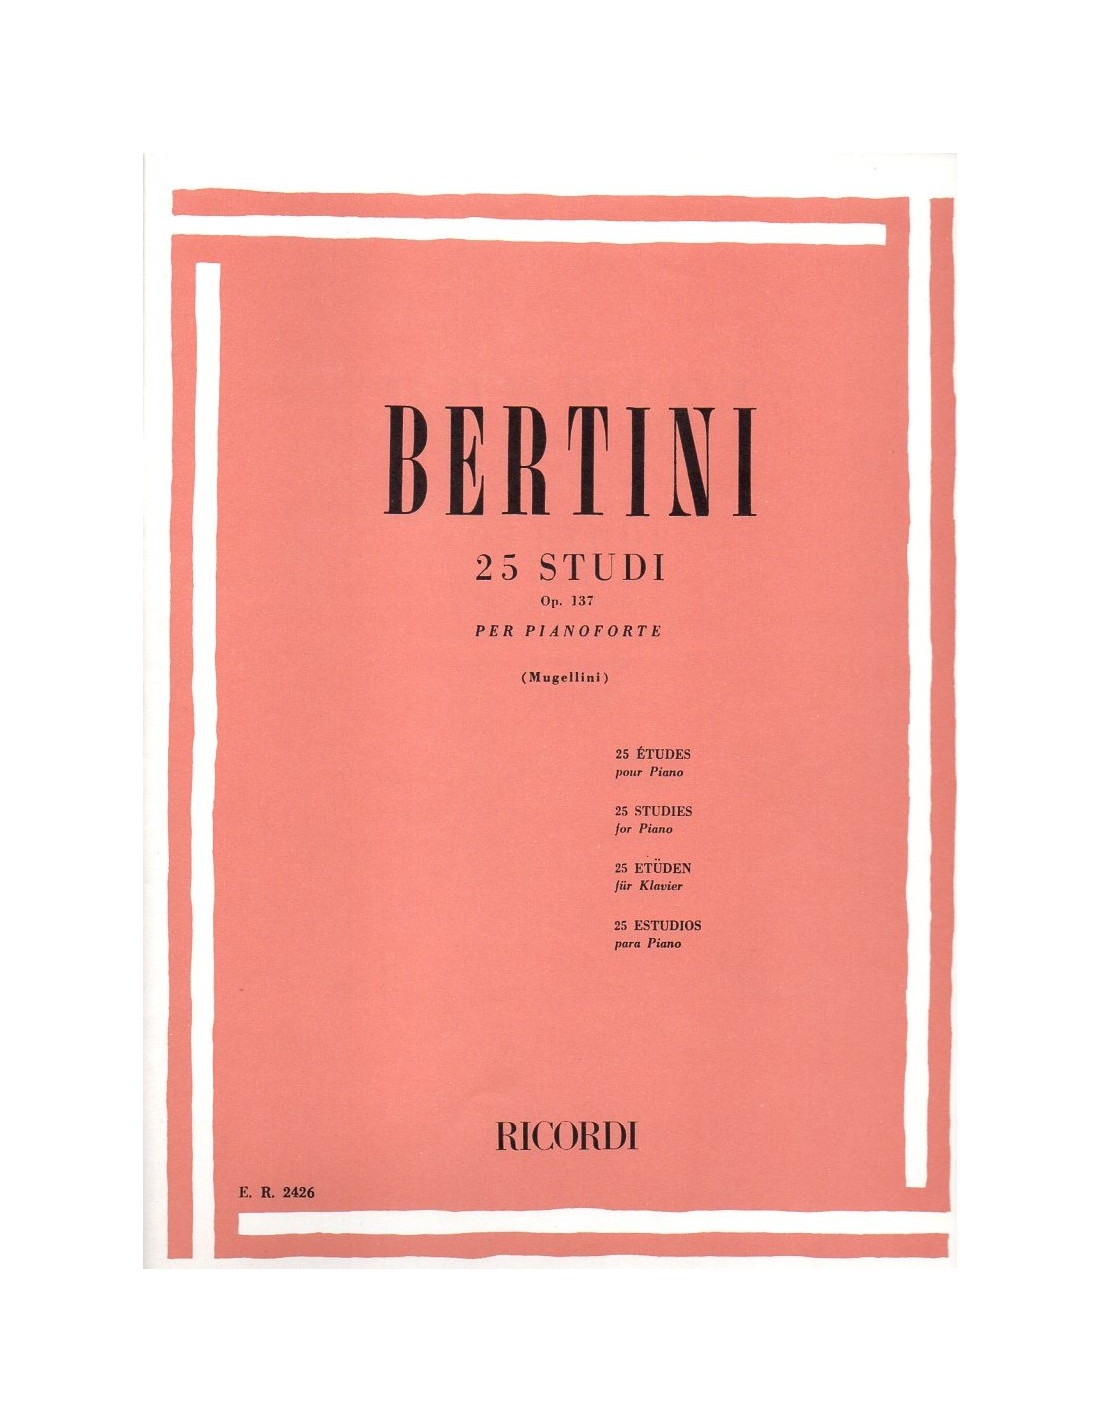 - Ricordi Per Pianoforte Bertini: 25 STUDI Op.137 Mugellini